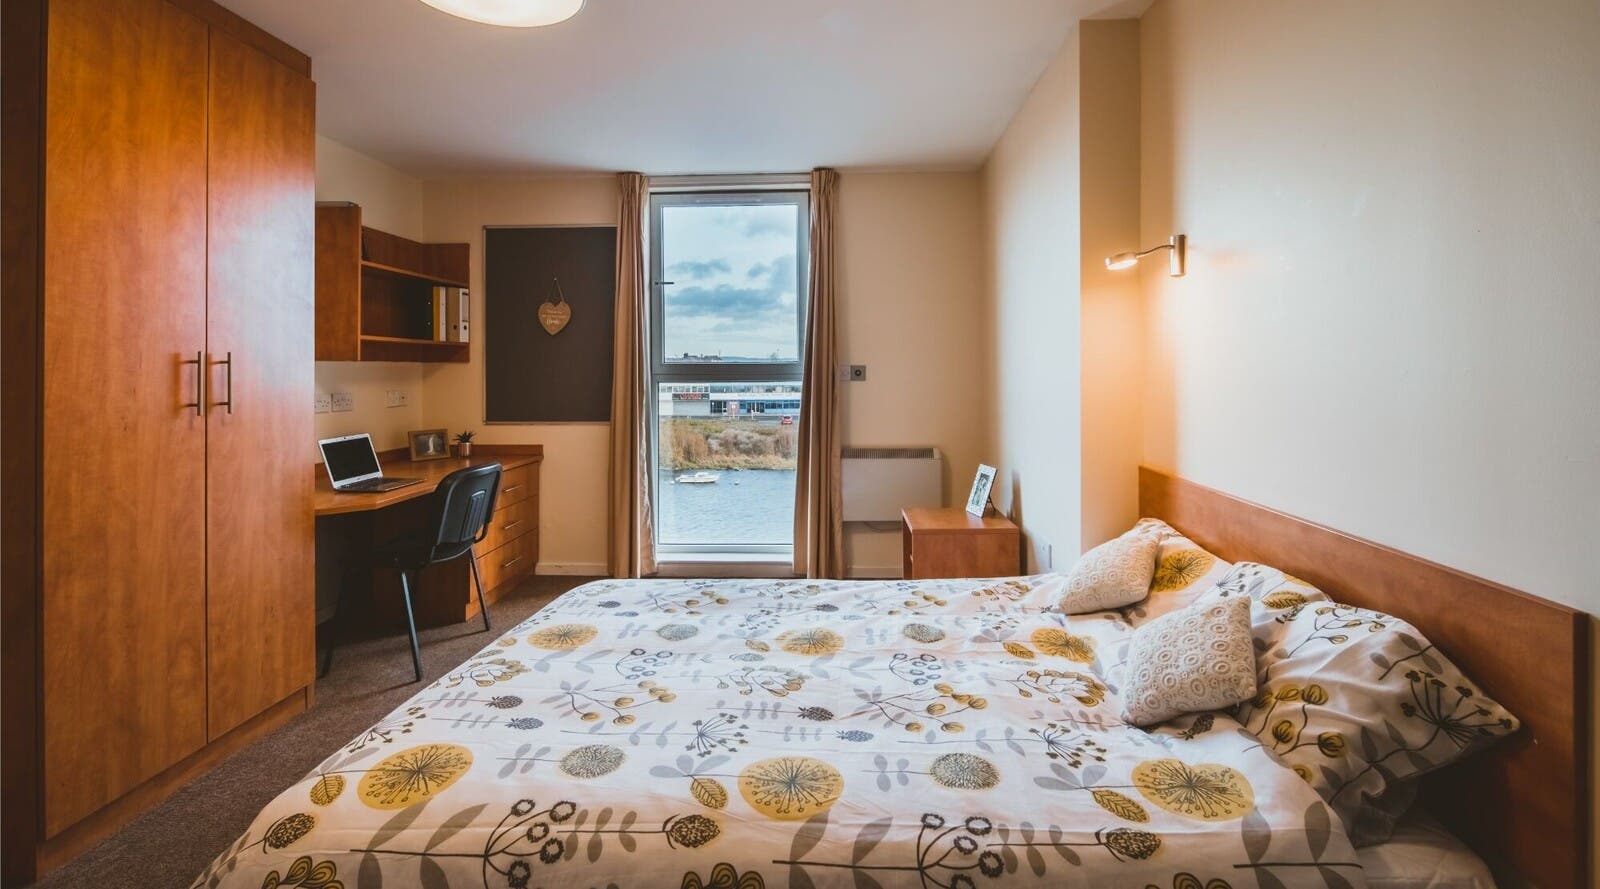 Student accommodation bedroom